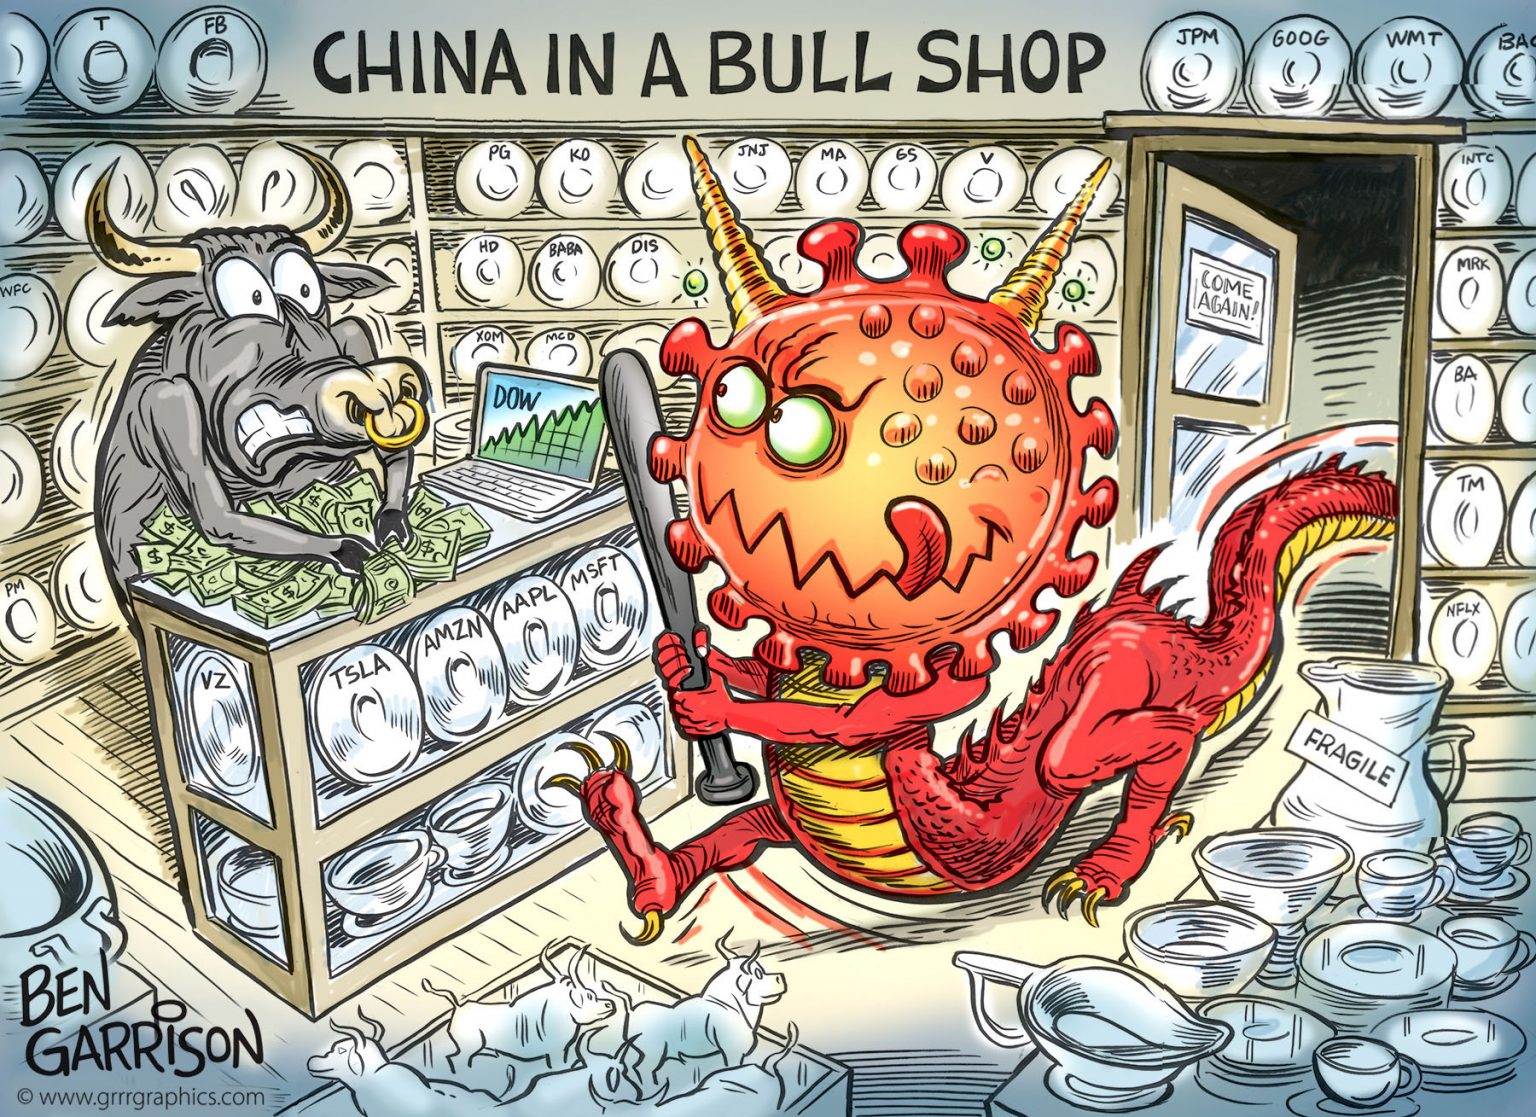 china_in_bull_shop-1-1536x1117.jpg